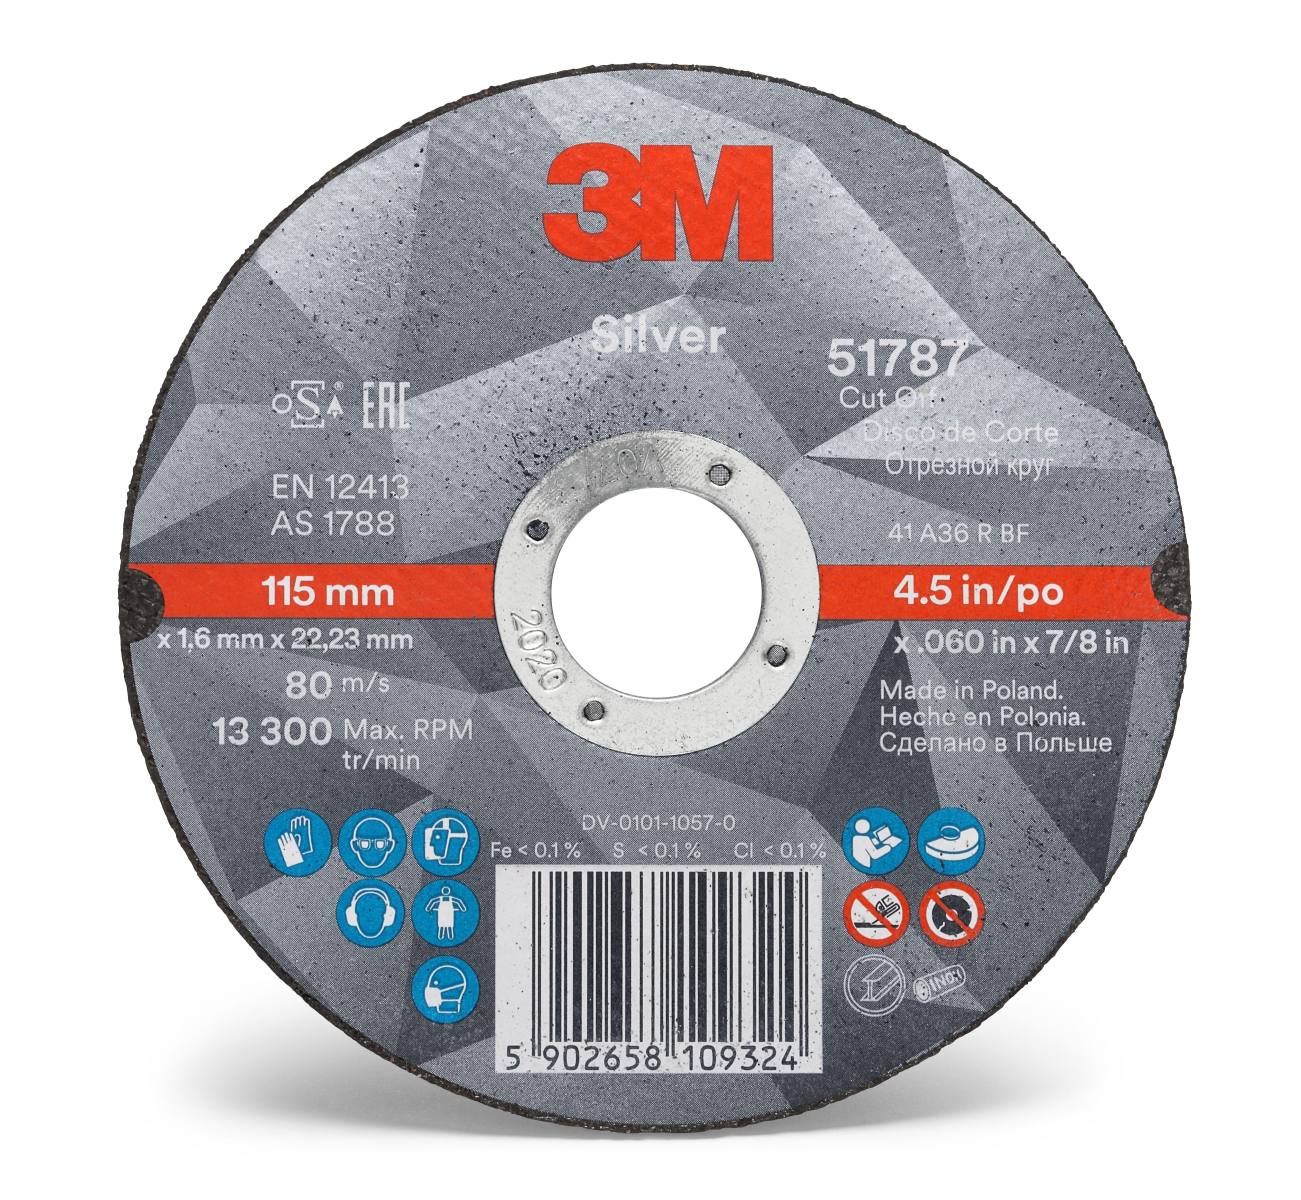 3M Silver Cut-Off Wheel cutting disc, 115 mm, 1.6 mm, 22.23 mm, T41, 51787